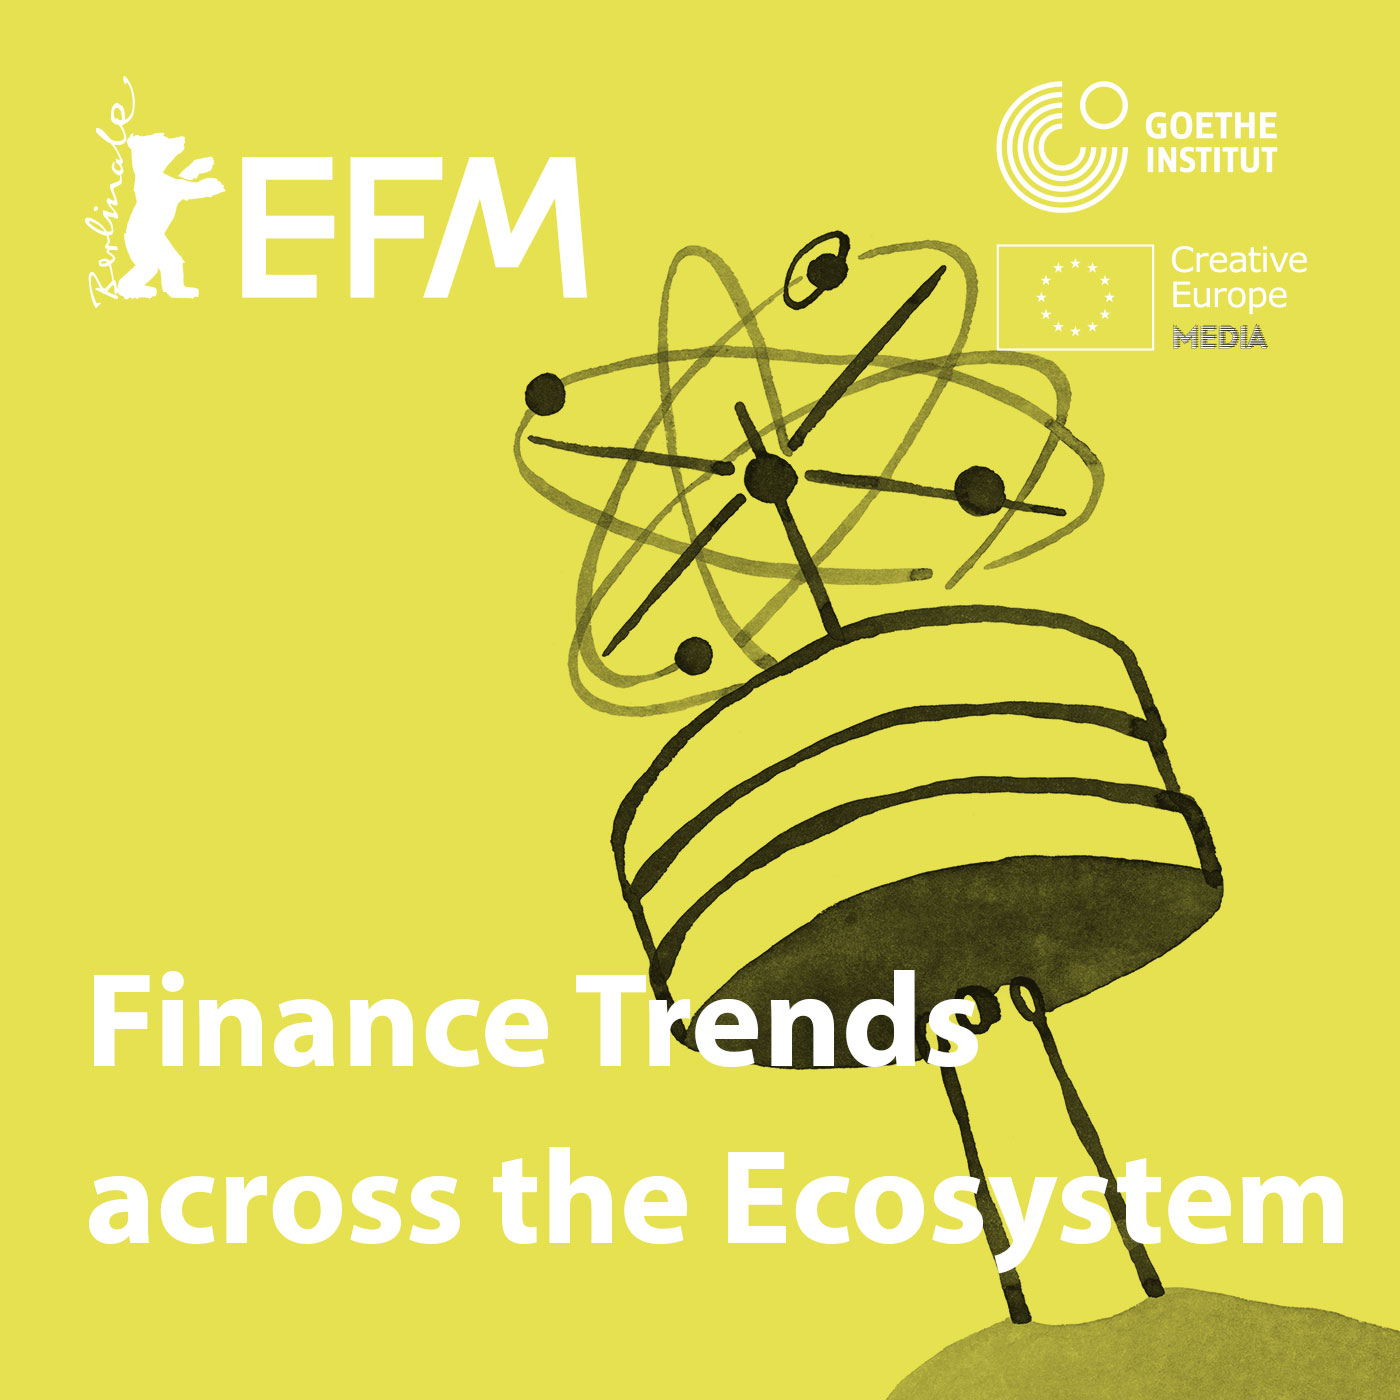 Finance Trends across the Ecosystem